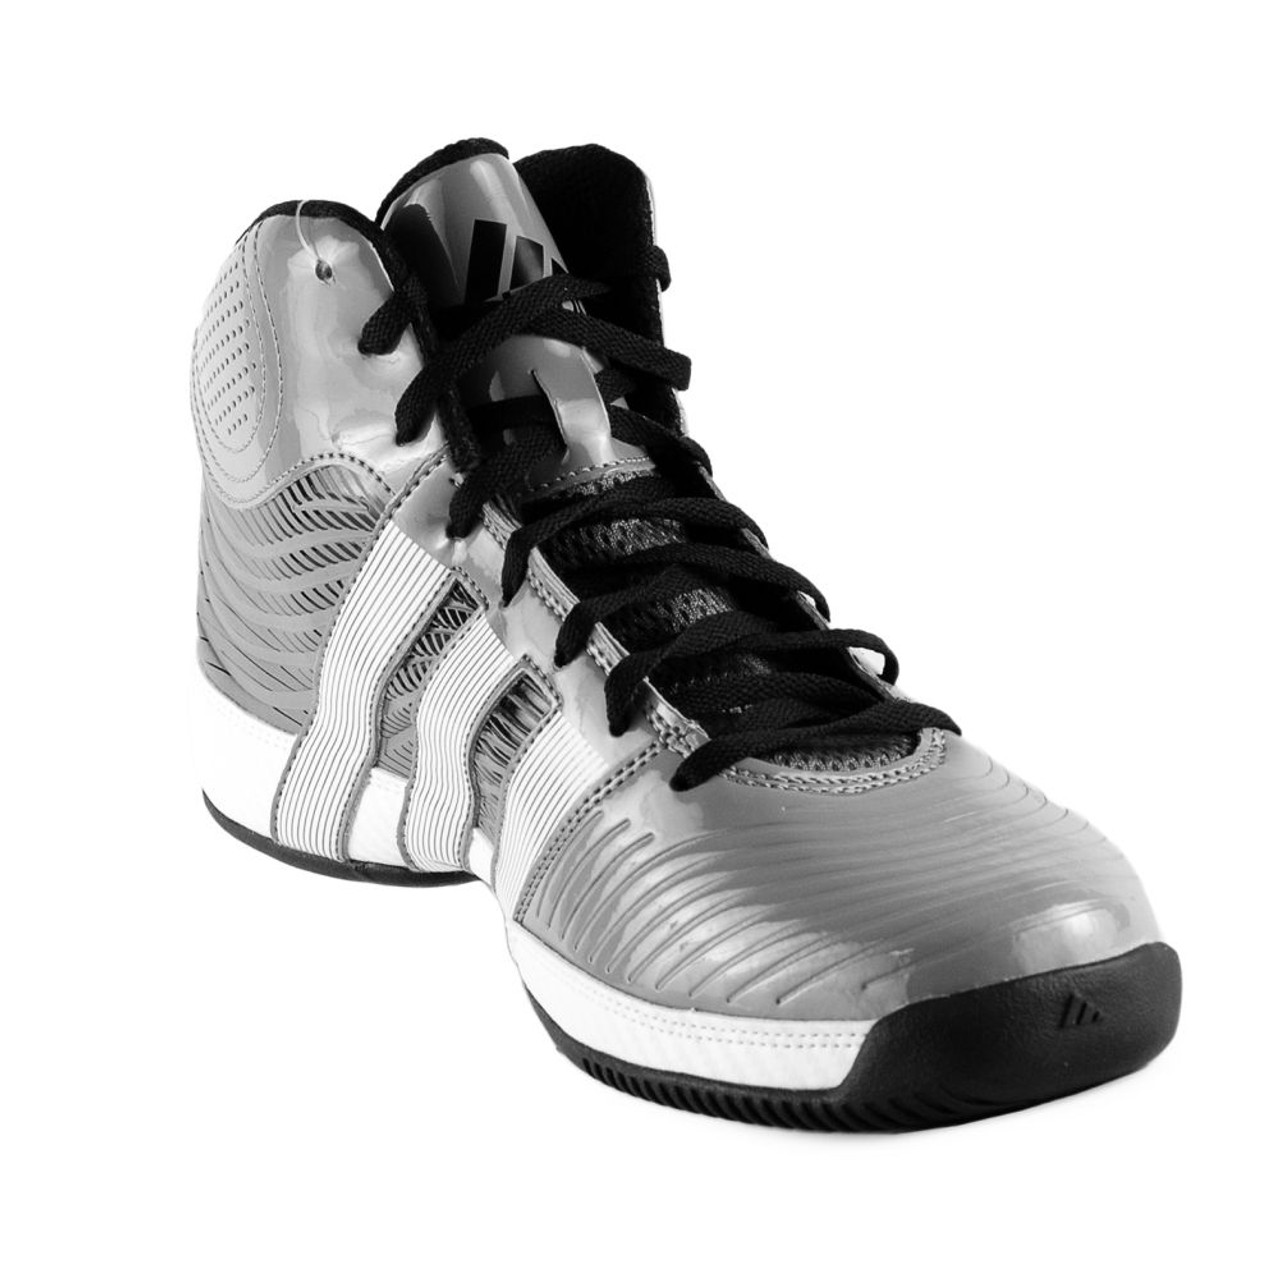 Adidas Commander TD 4 Grey/White/Black Mens Basketball Shoes -  Grey/White/Black | Discount Adidas Men's Athletic Shoes & More - Shoolu.com  | Shoolu.com